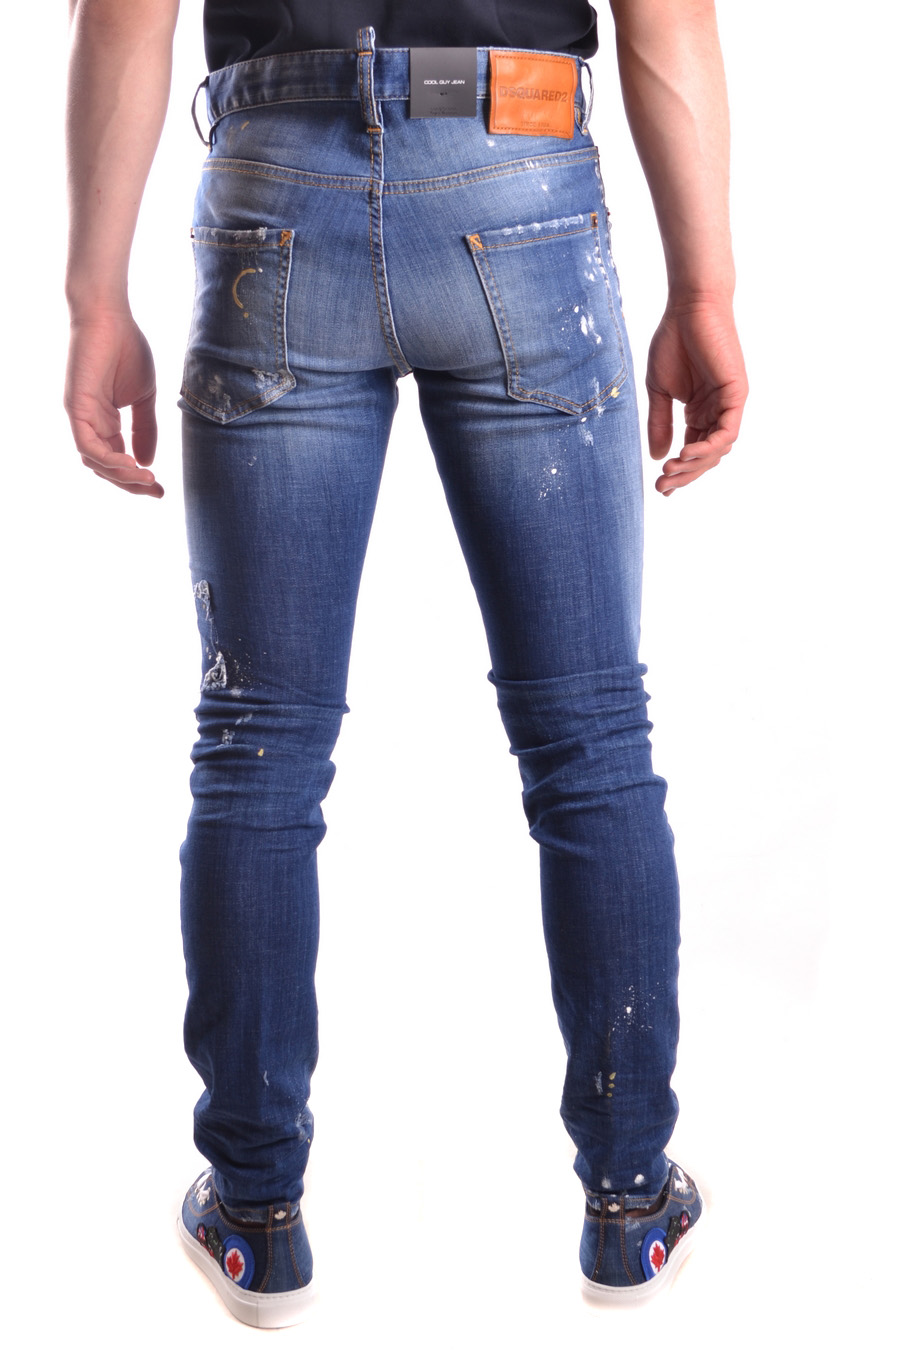 DSQUARED2 Jeans | ViganoBoutique.com